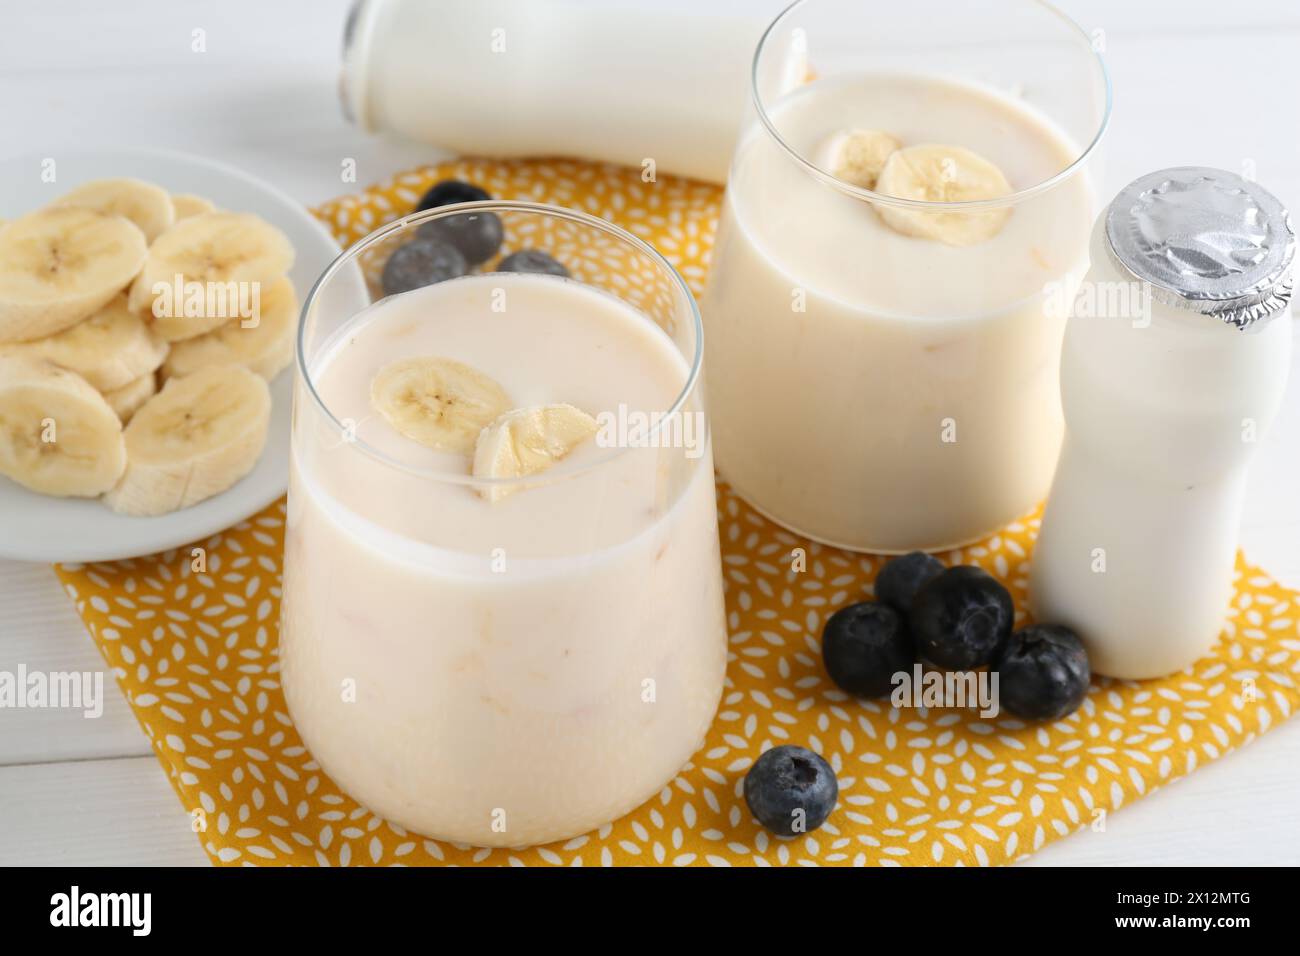 Tasty yogurt, banana and blueberries on white wooden table, closeup Stock Photo